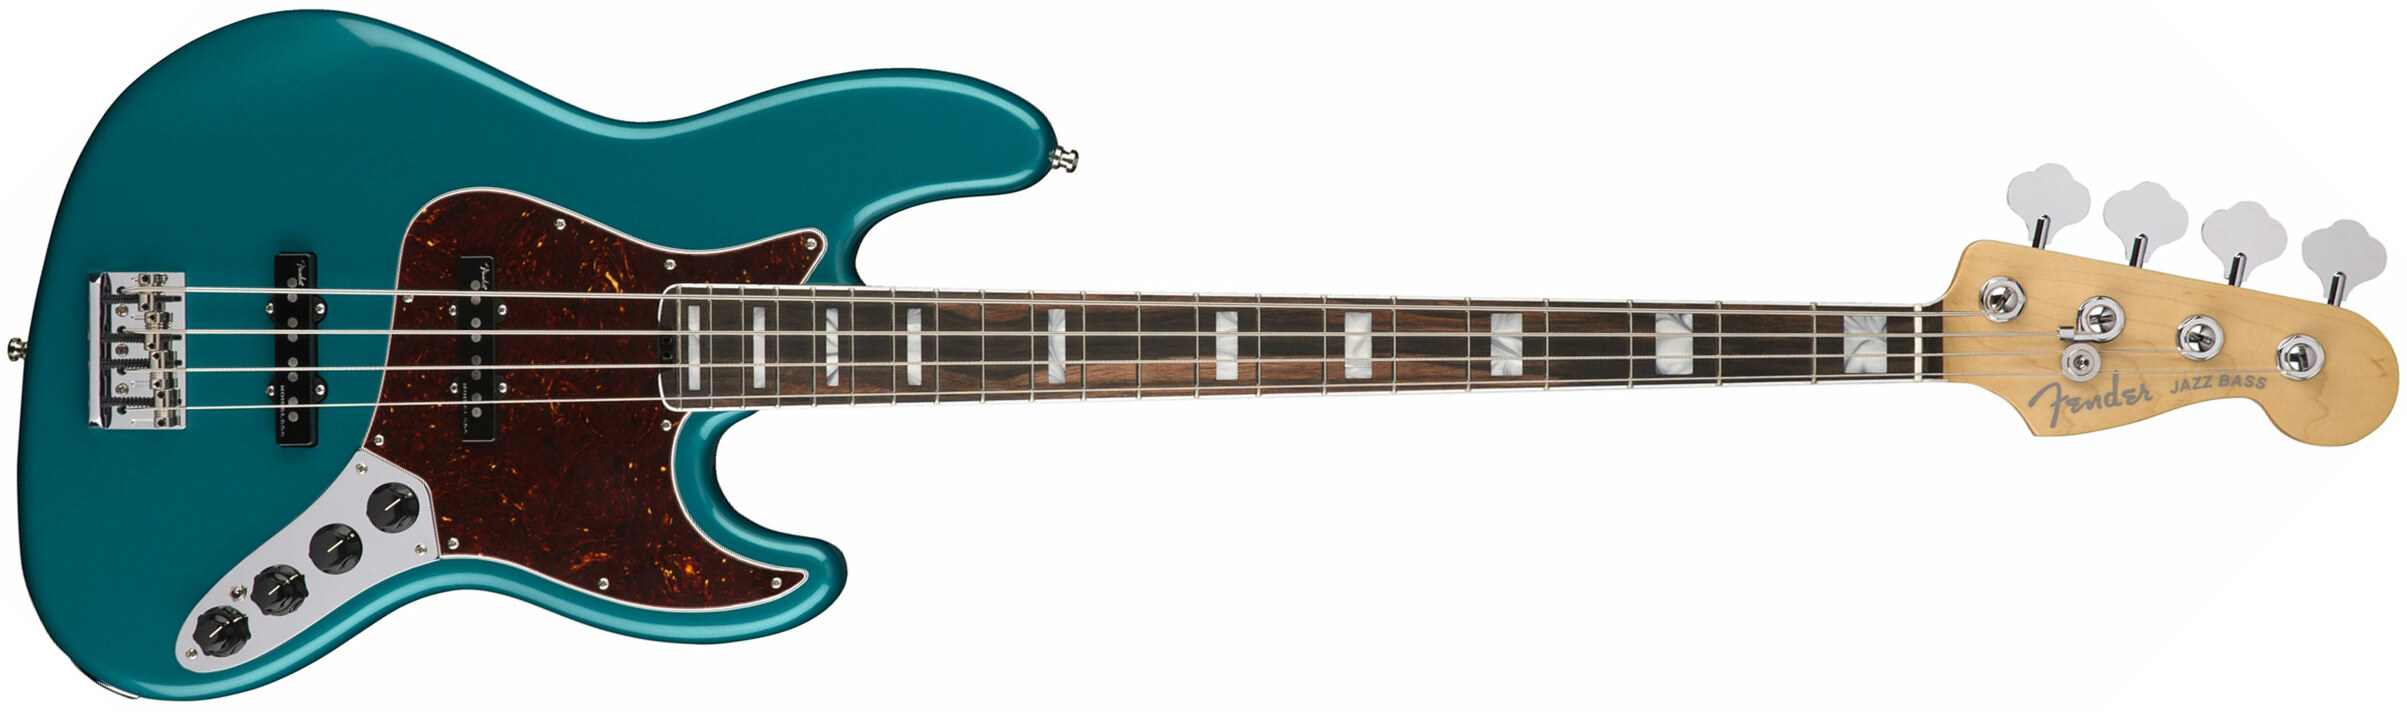 Fender American Elite Jazz Bass 2018 Usa Eb - Ocean Turquoise - Solid body elektrische bas - Main picture